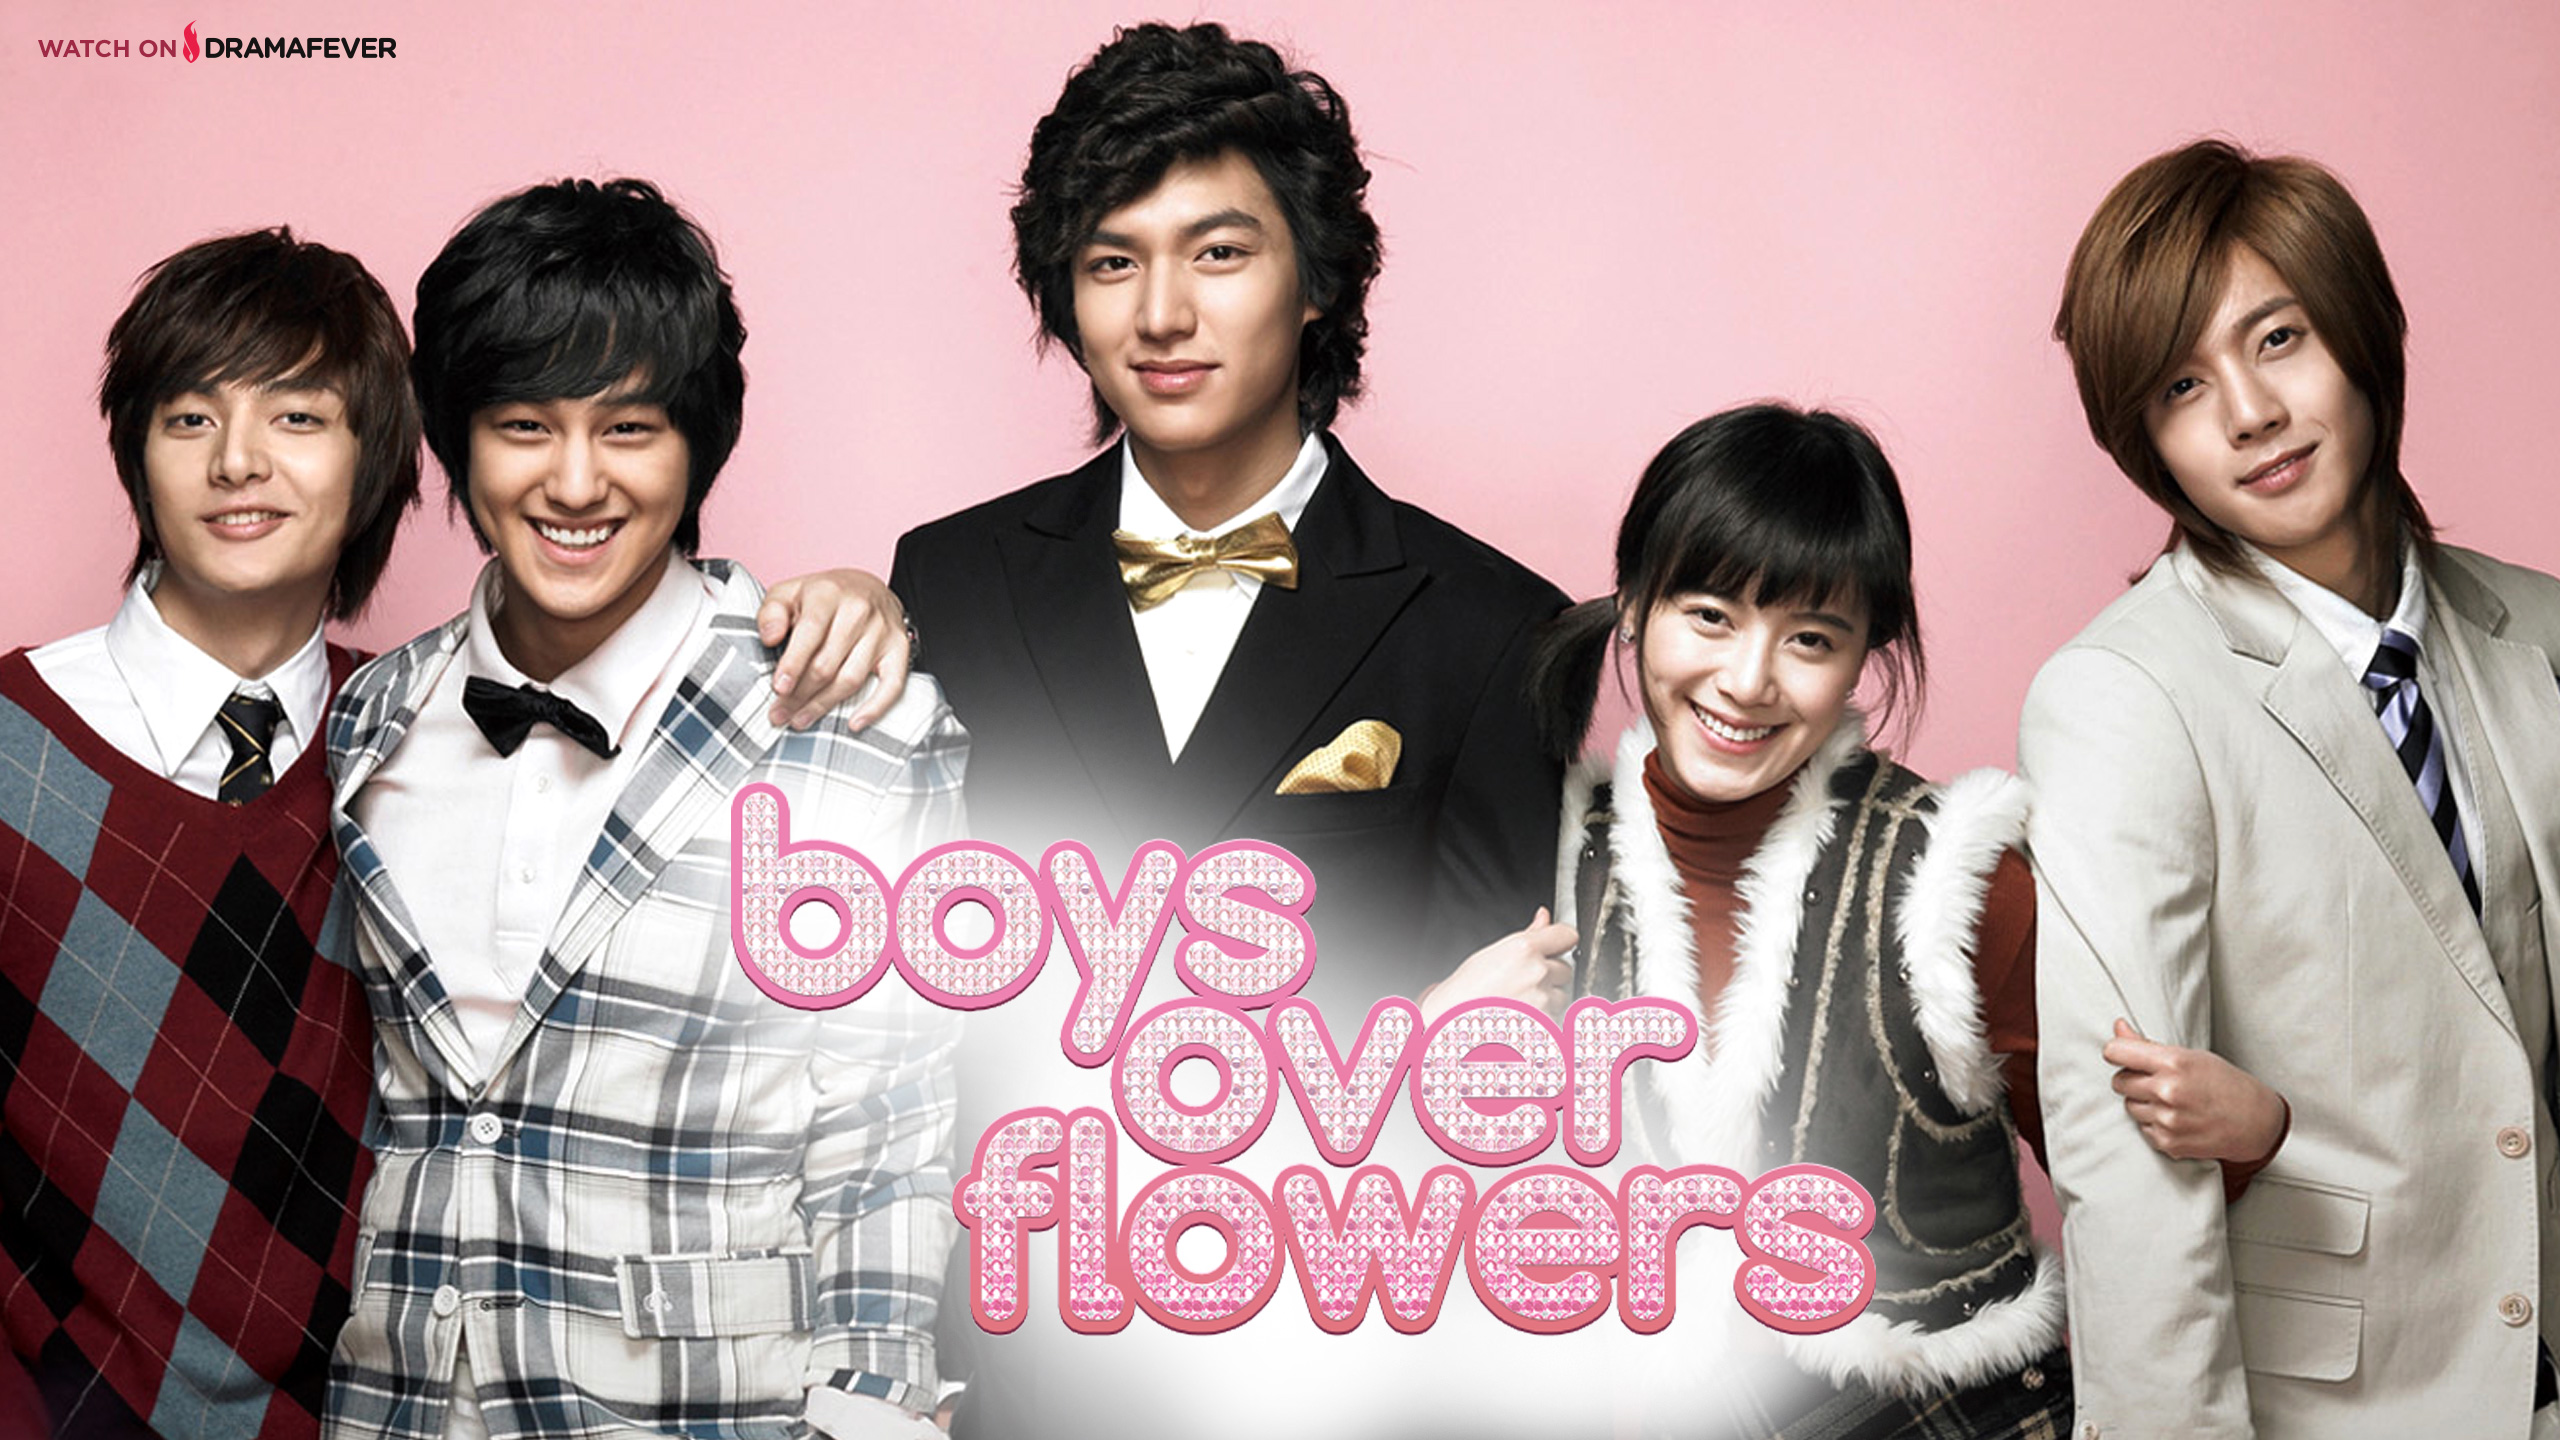 boys over flowers desktop wallpaper